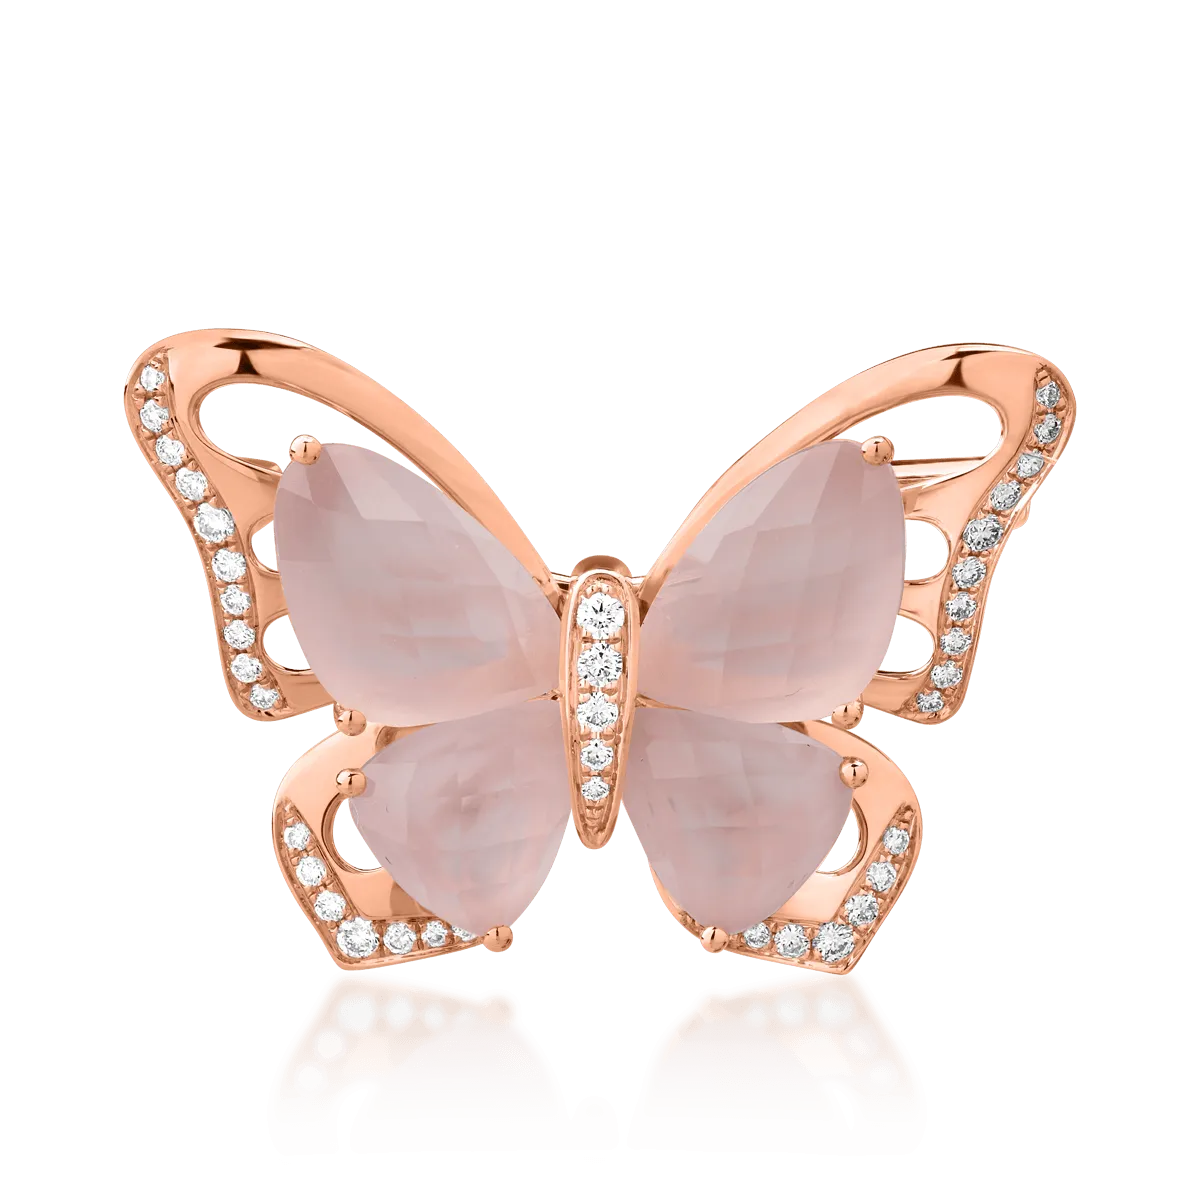 Brosa fluture din aur roz de 18K cu quartz trandafiriu de 11.8ct si diamante de 0.39ct